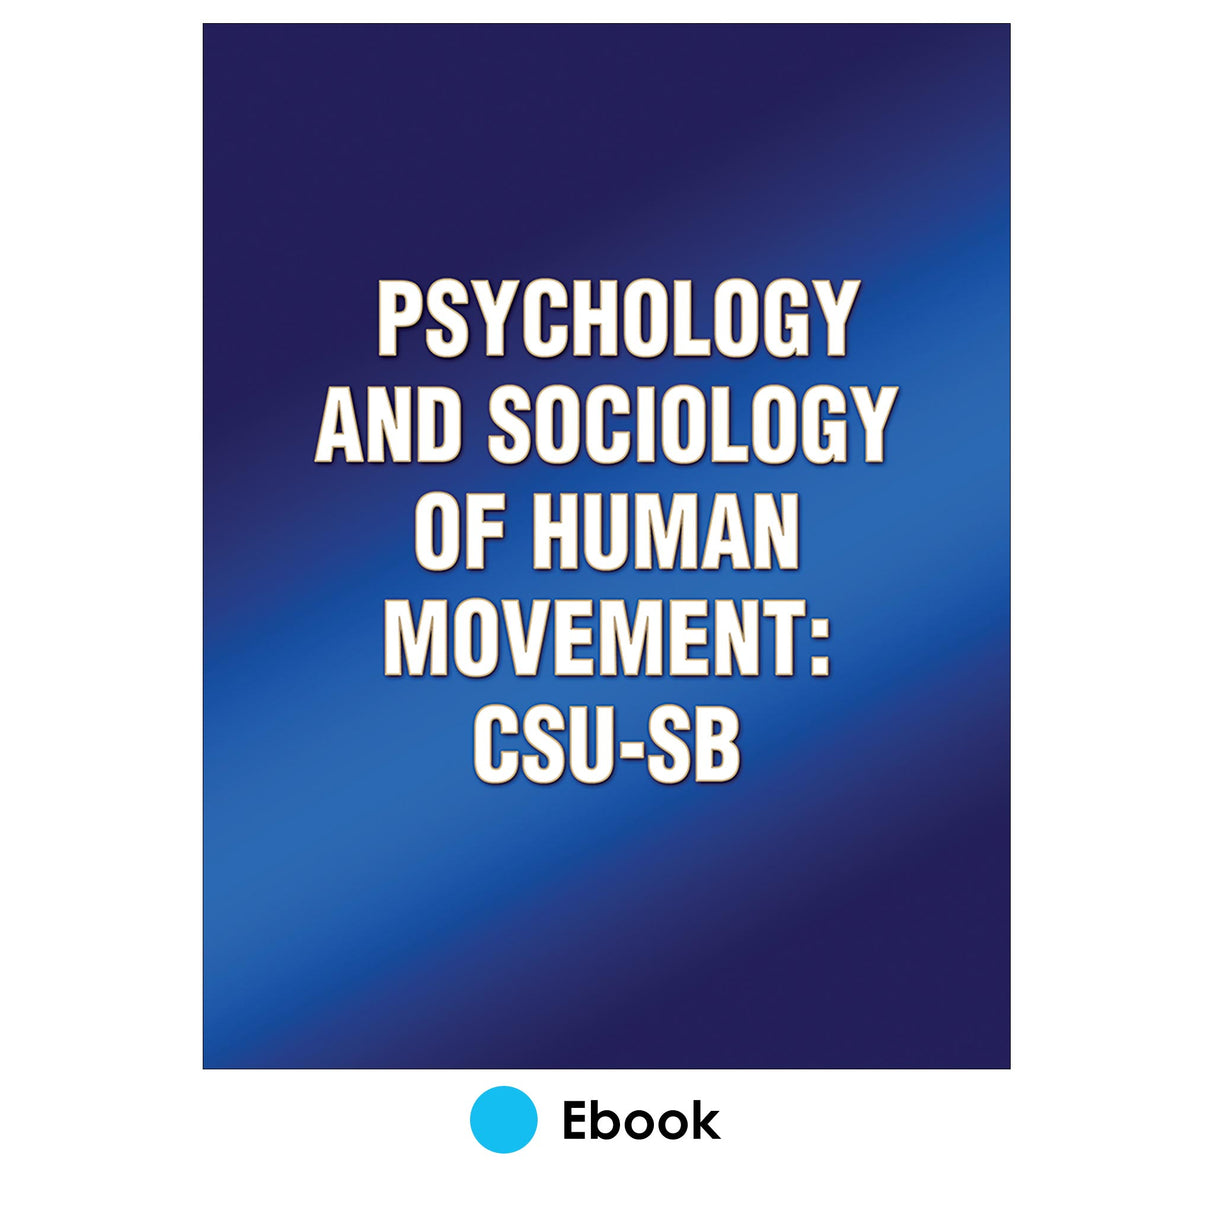 Psychology and Sociology of Human Movement: CSU-SB